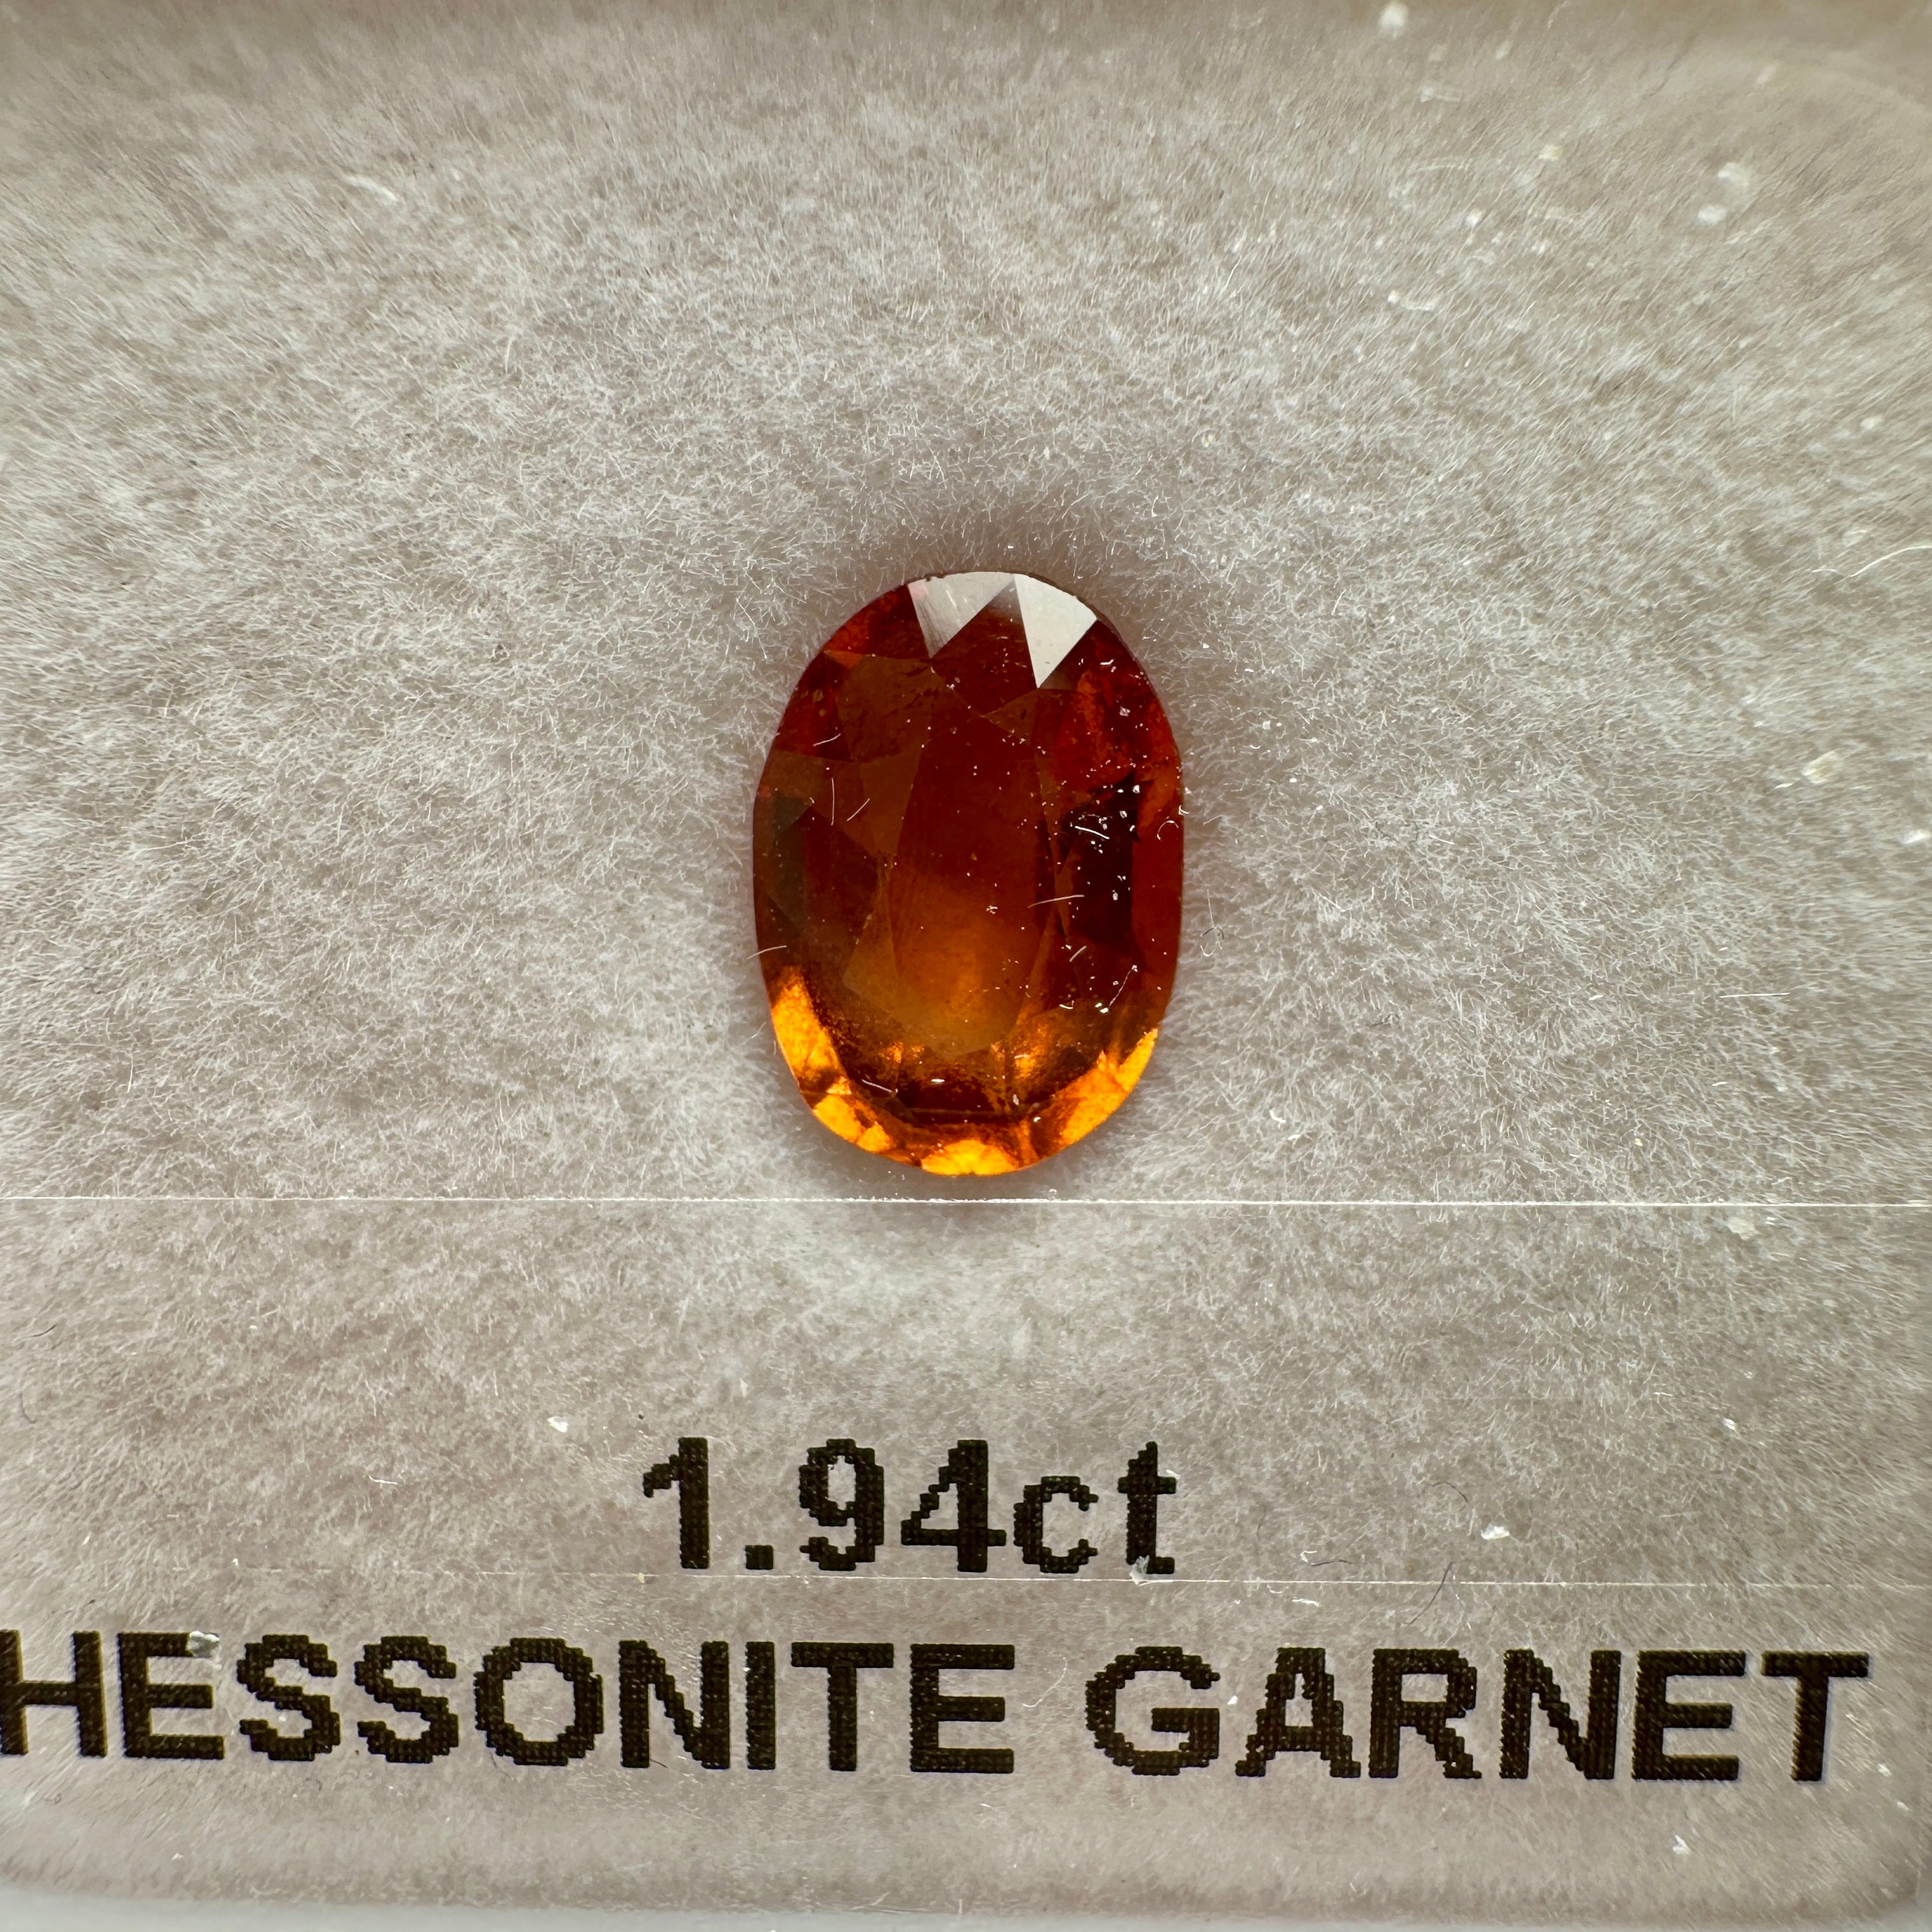 1.94ct Hessonite Garnet, Untreated Unheated, native cut